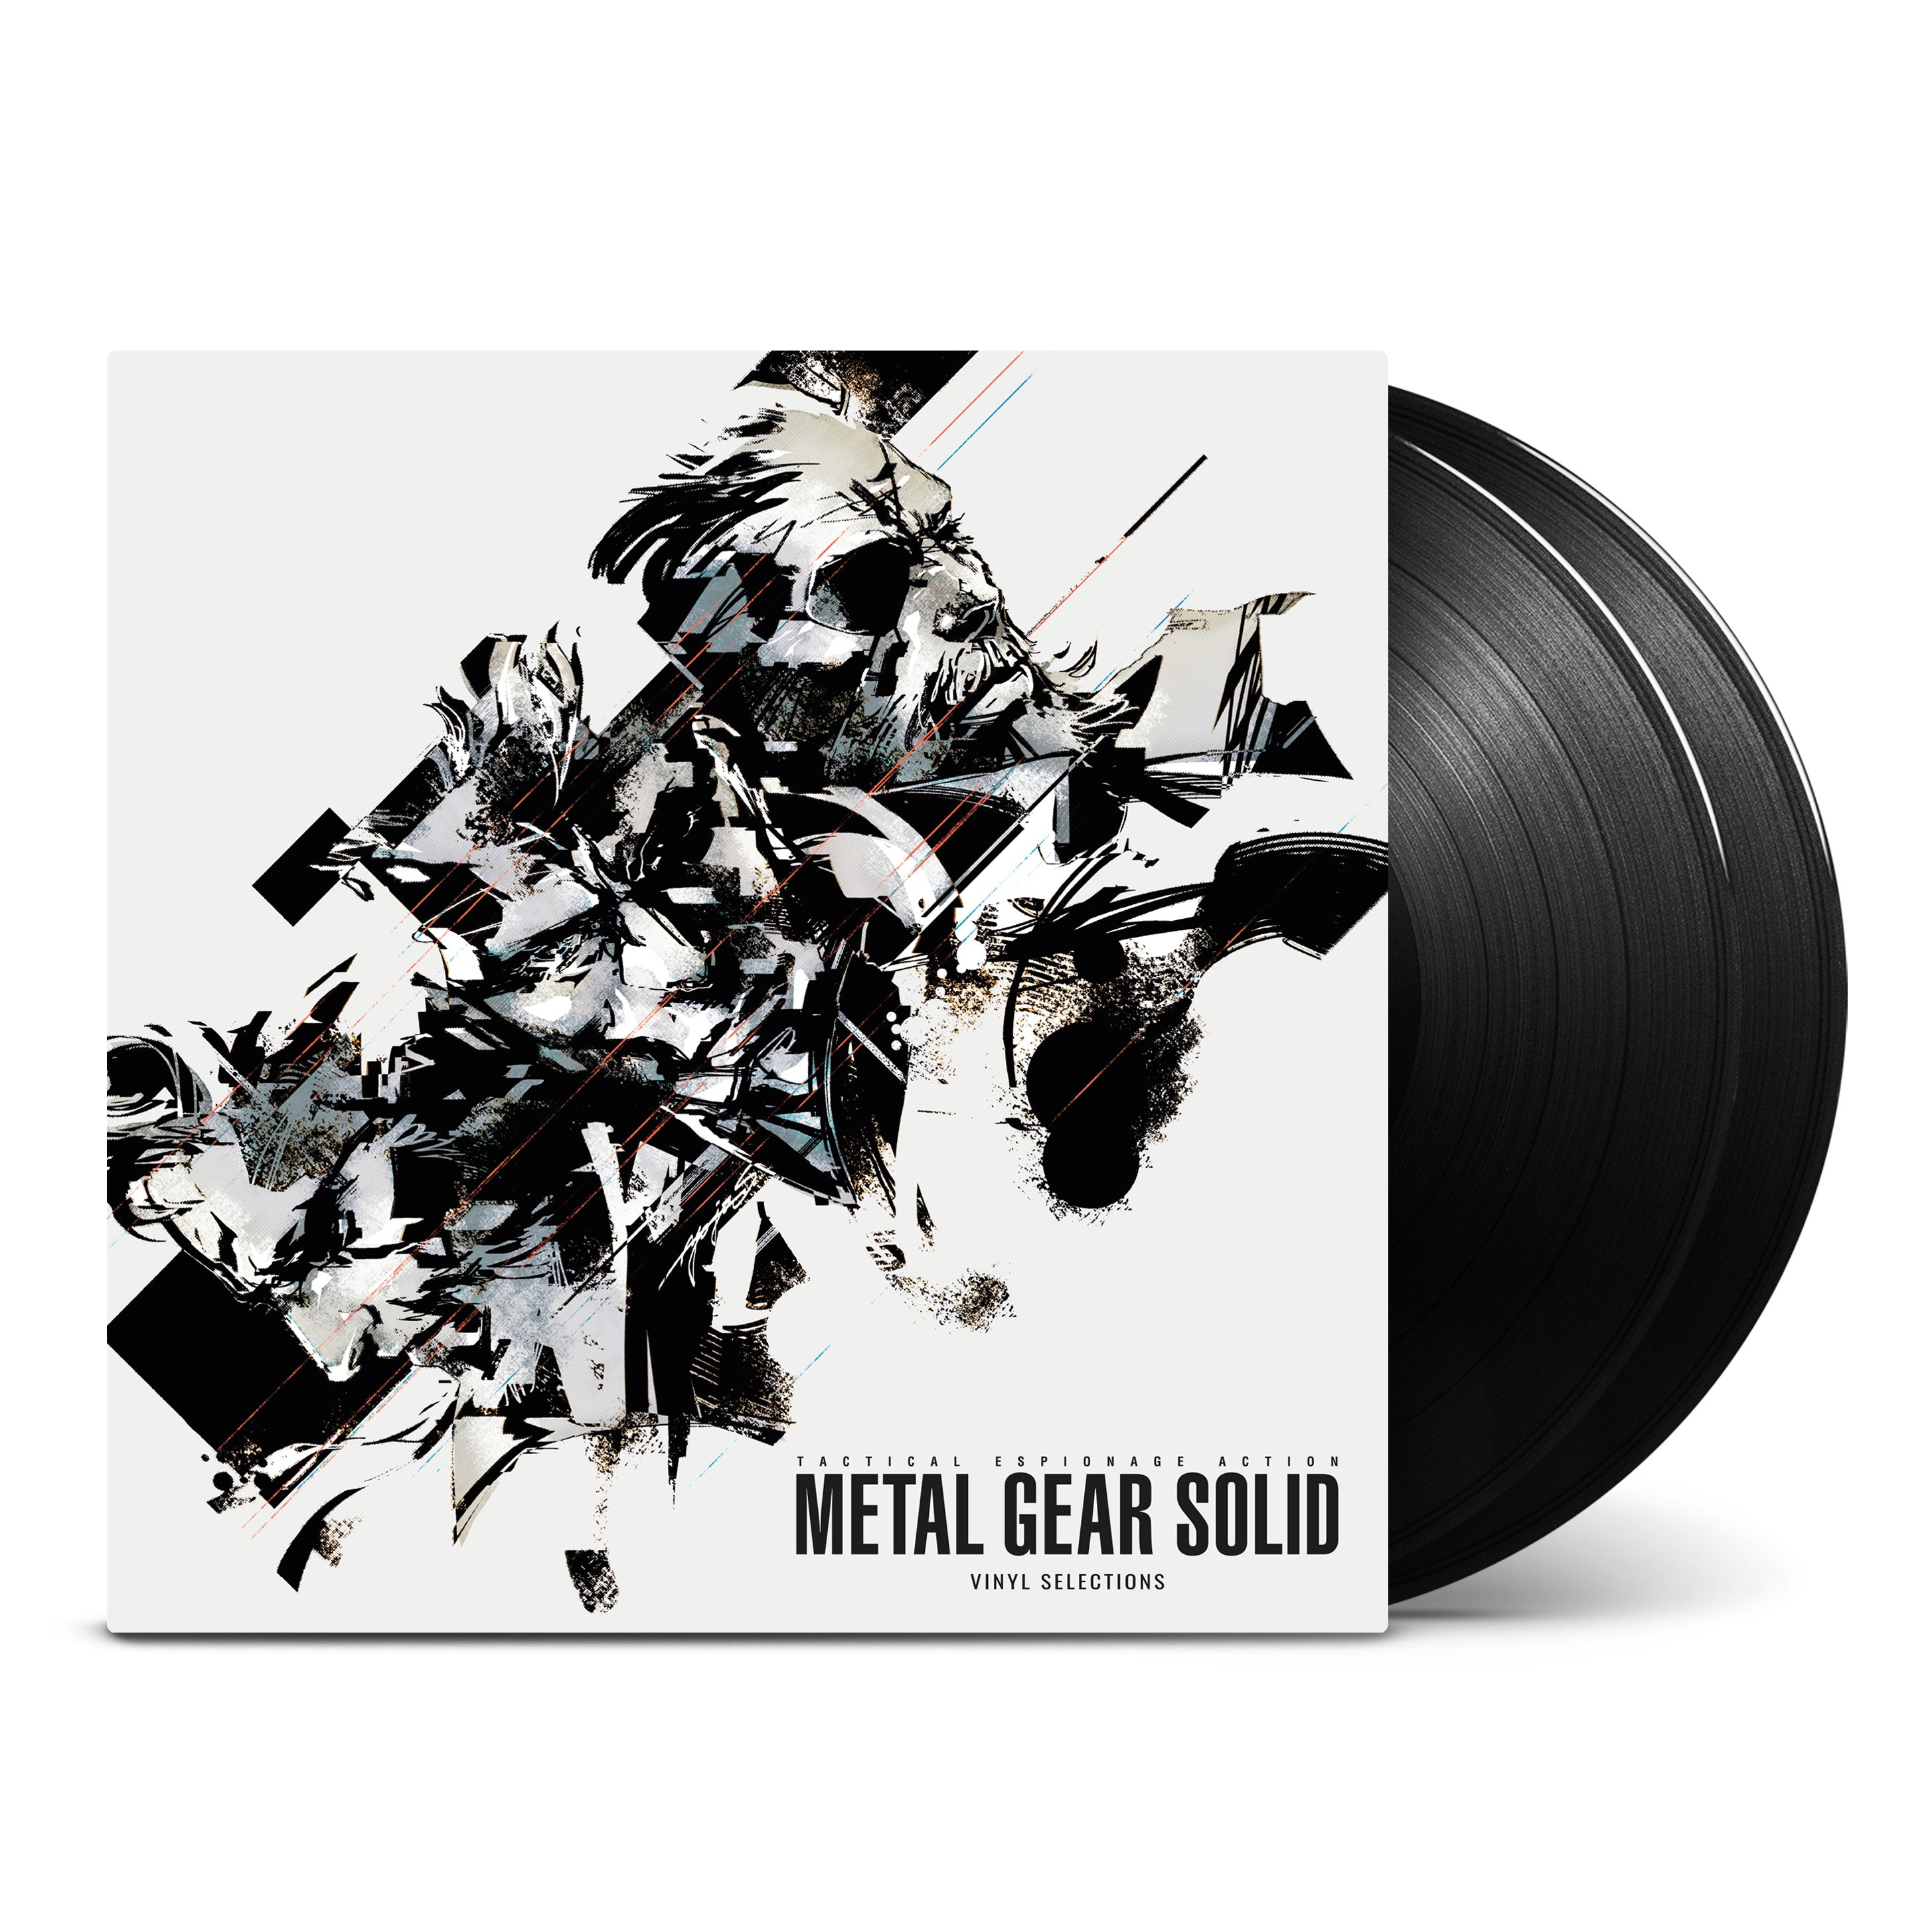 Various Artists - Metal Gear Solid - Vinyl Selections (Original Soundtrack): Vinyl 2LP